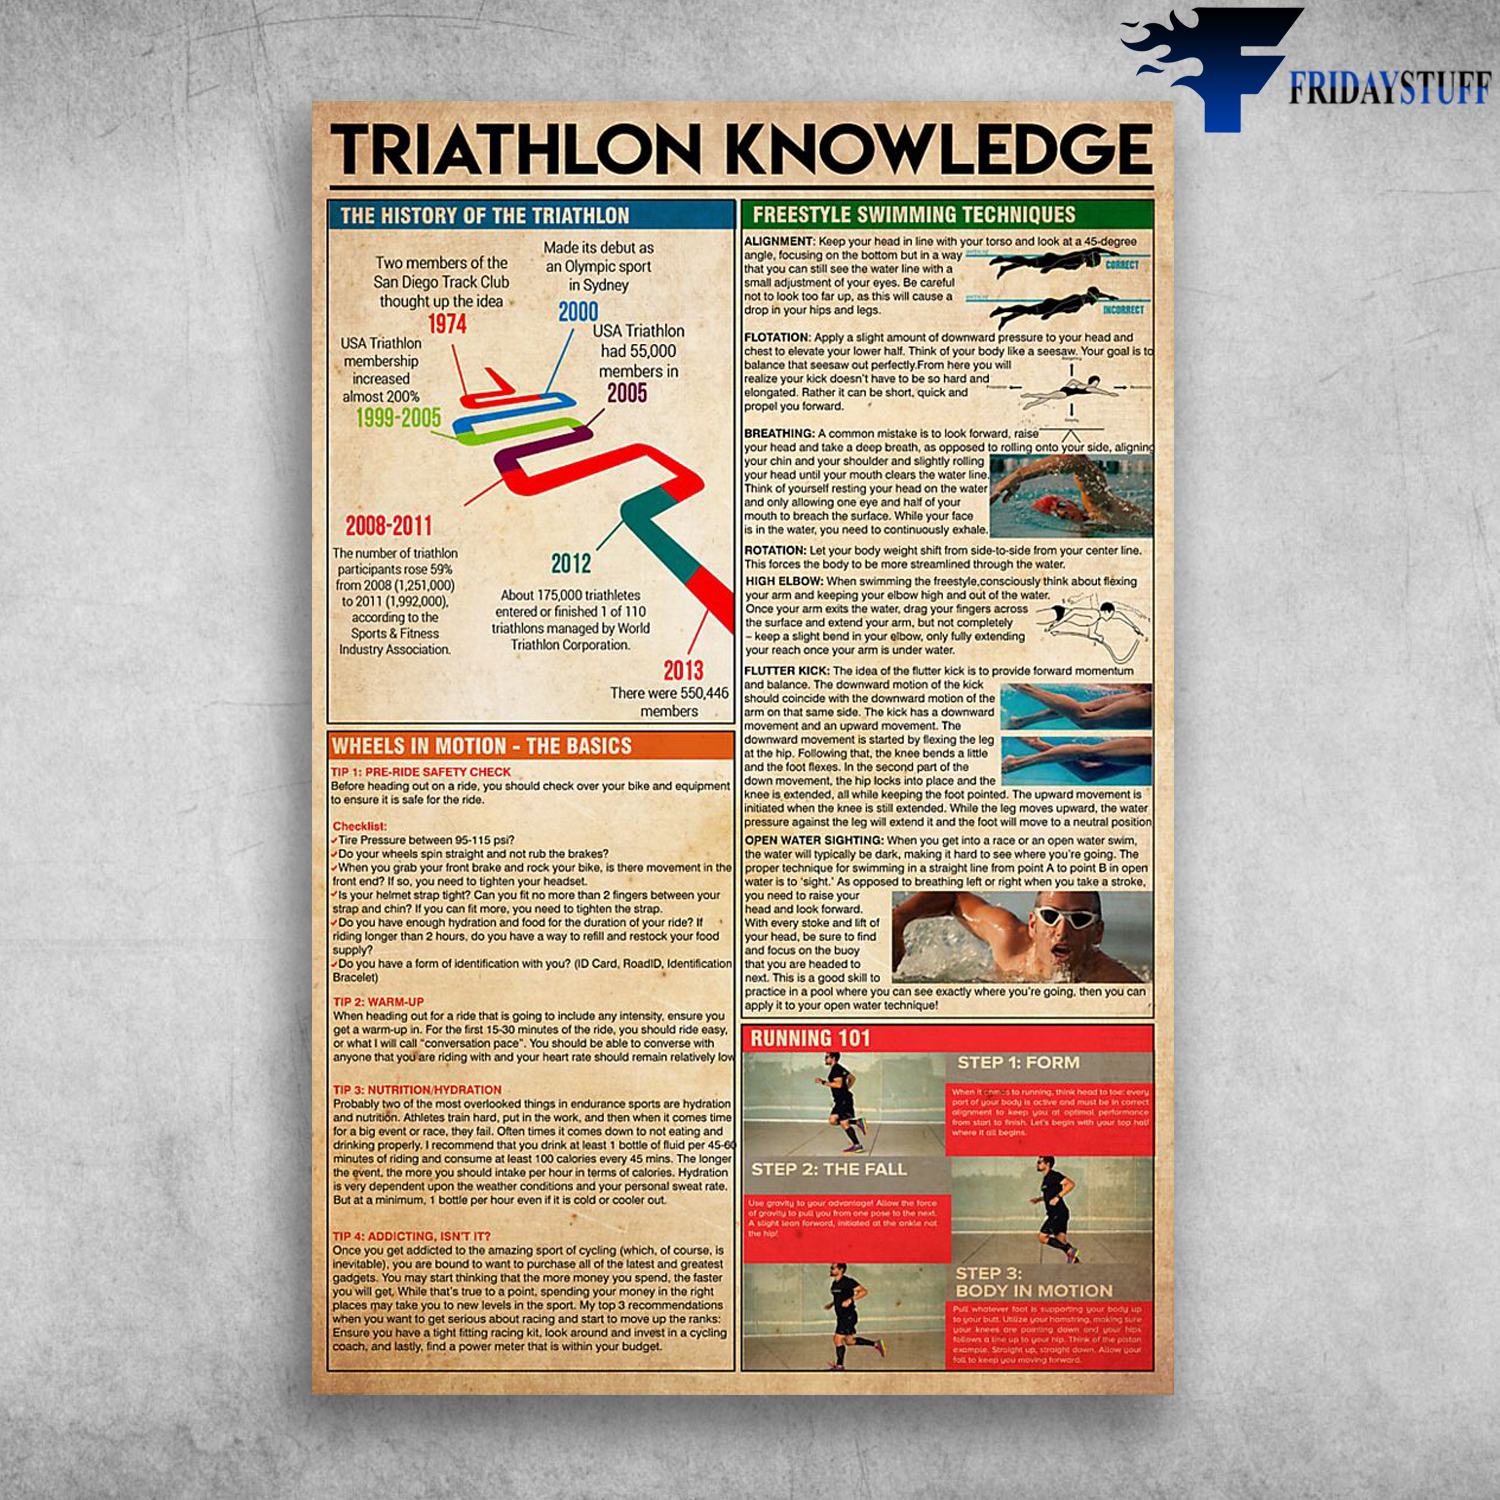 Triathlon Knowledge Freestyle Swimming Techniques